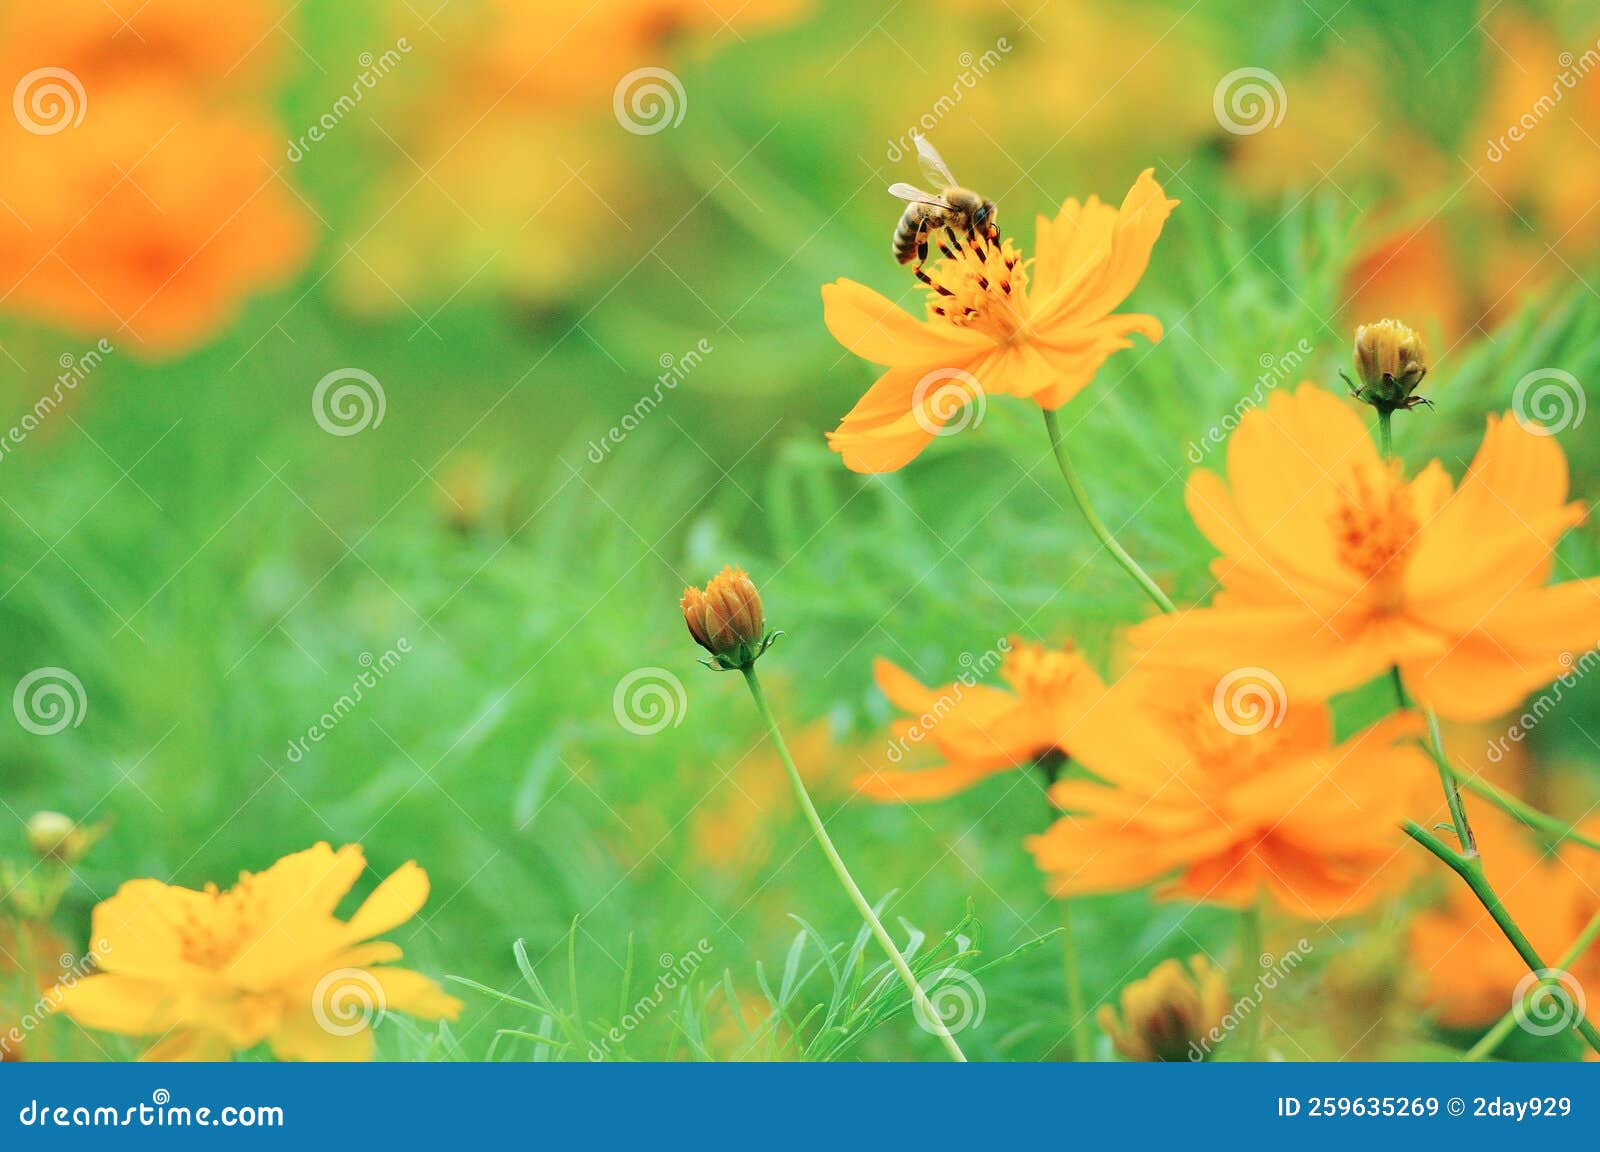 cosmos sulphureus and honey bee, nature, flower, spring